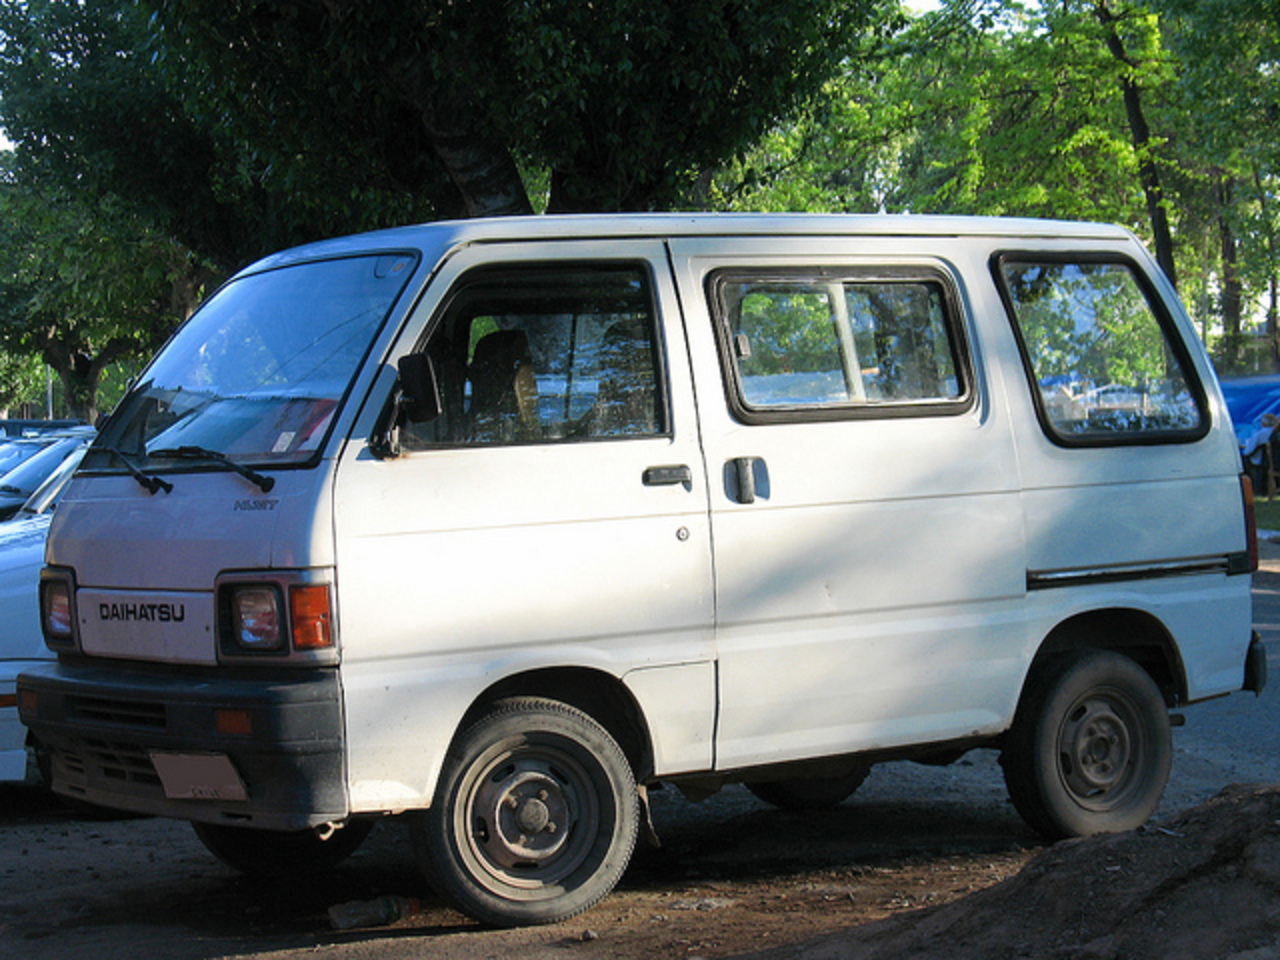 Daihatsu Hijet 1000 Van 1992 | Flickr - Photo Sharing!